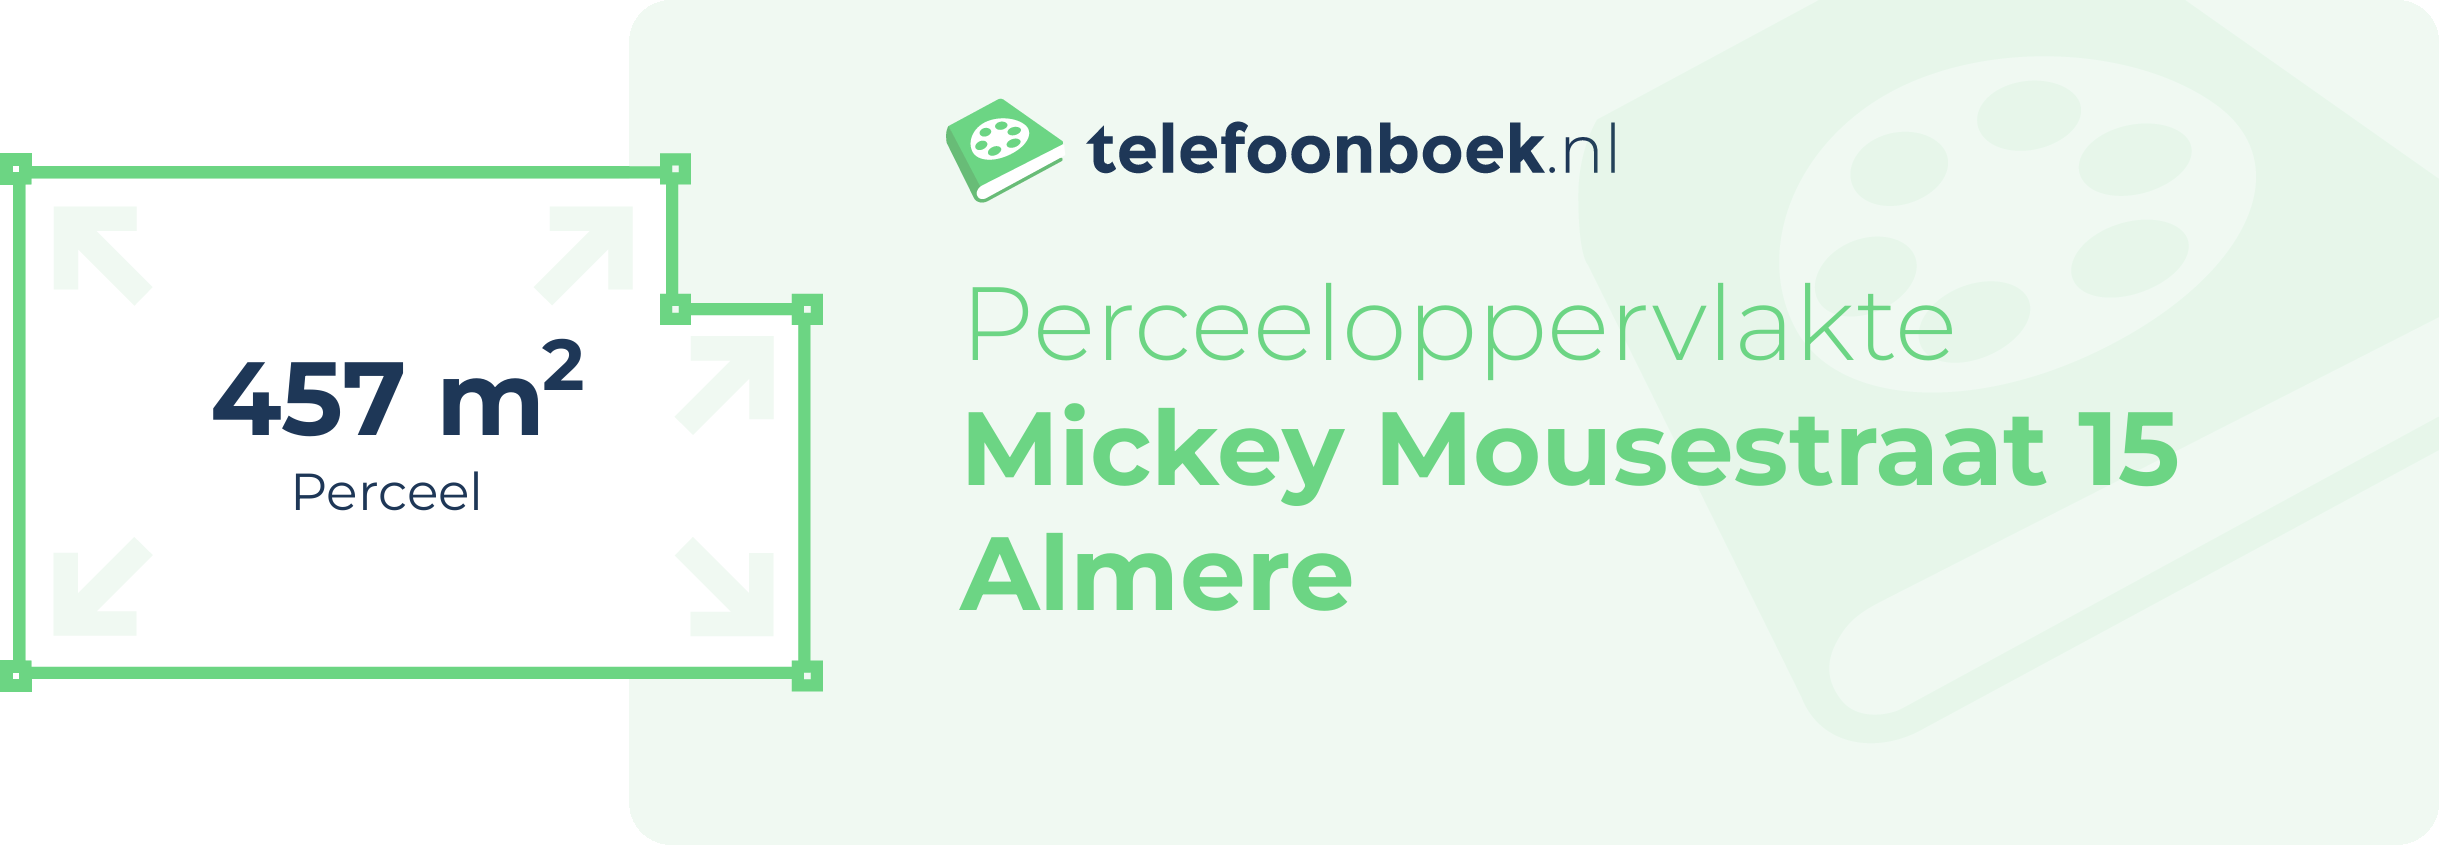 Perceeloppervlakte Mickey Mousestraat 15 Almere